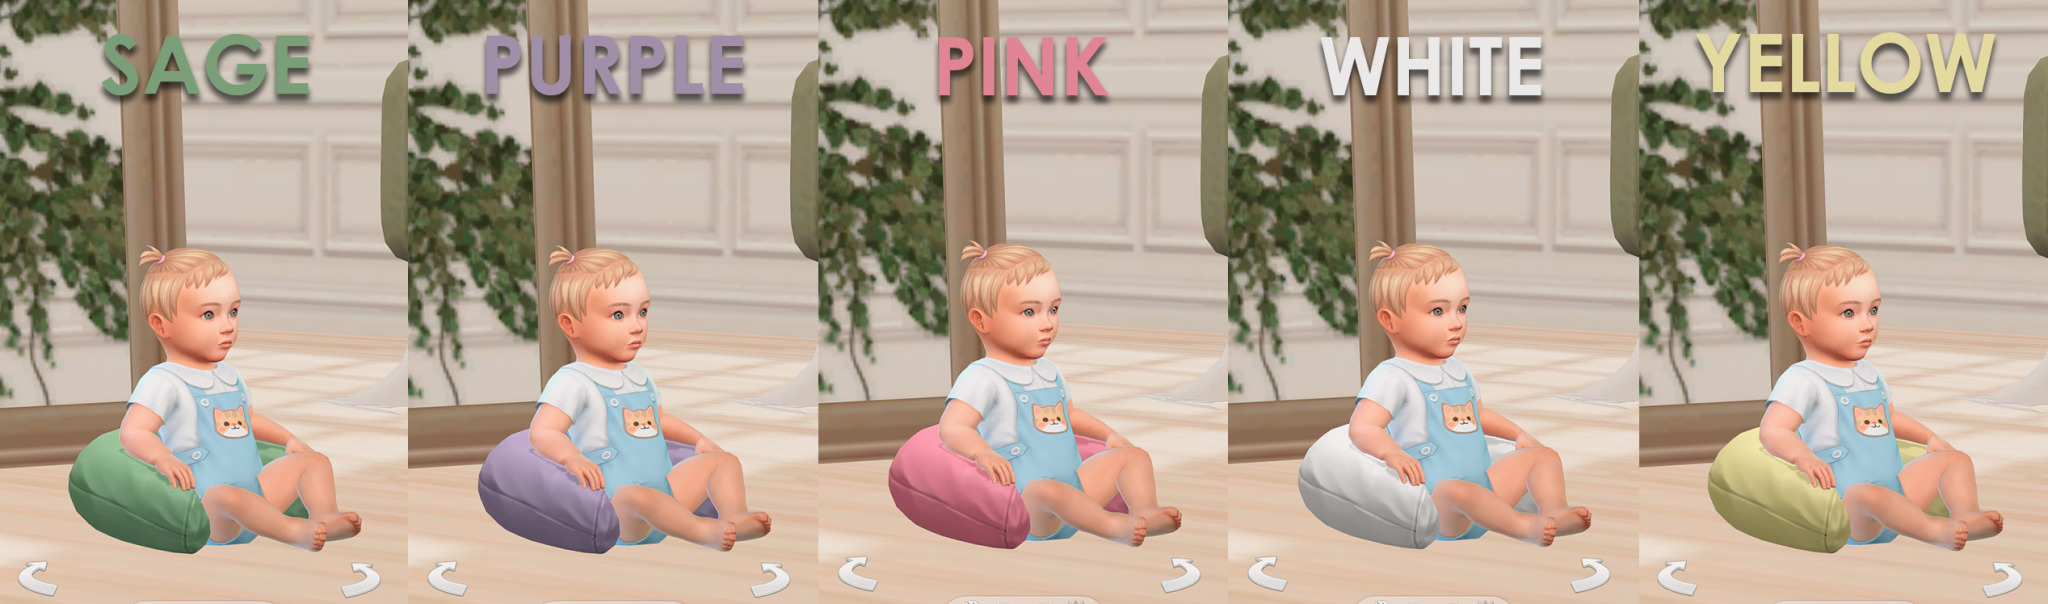 The Sims 4 Infants CAS: Customize Your Infants!